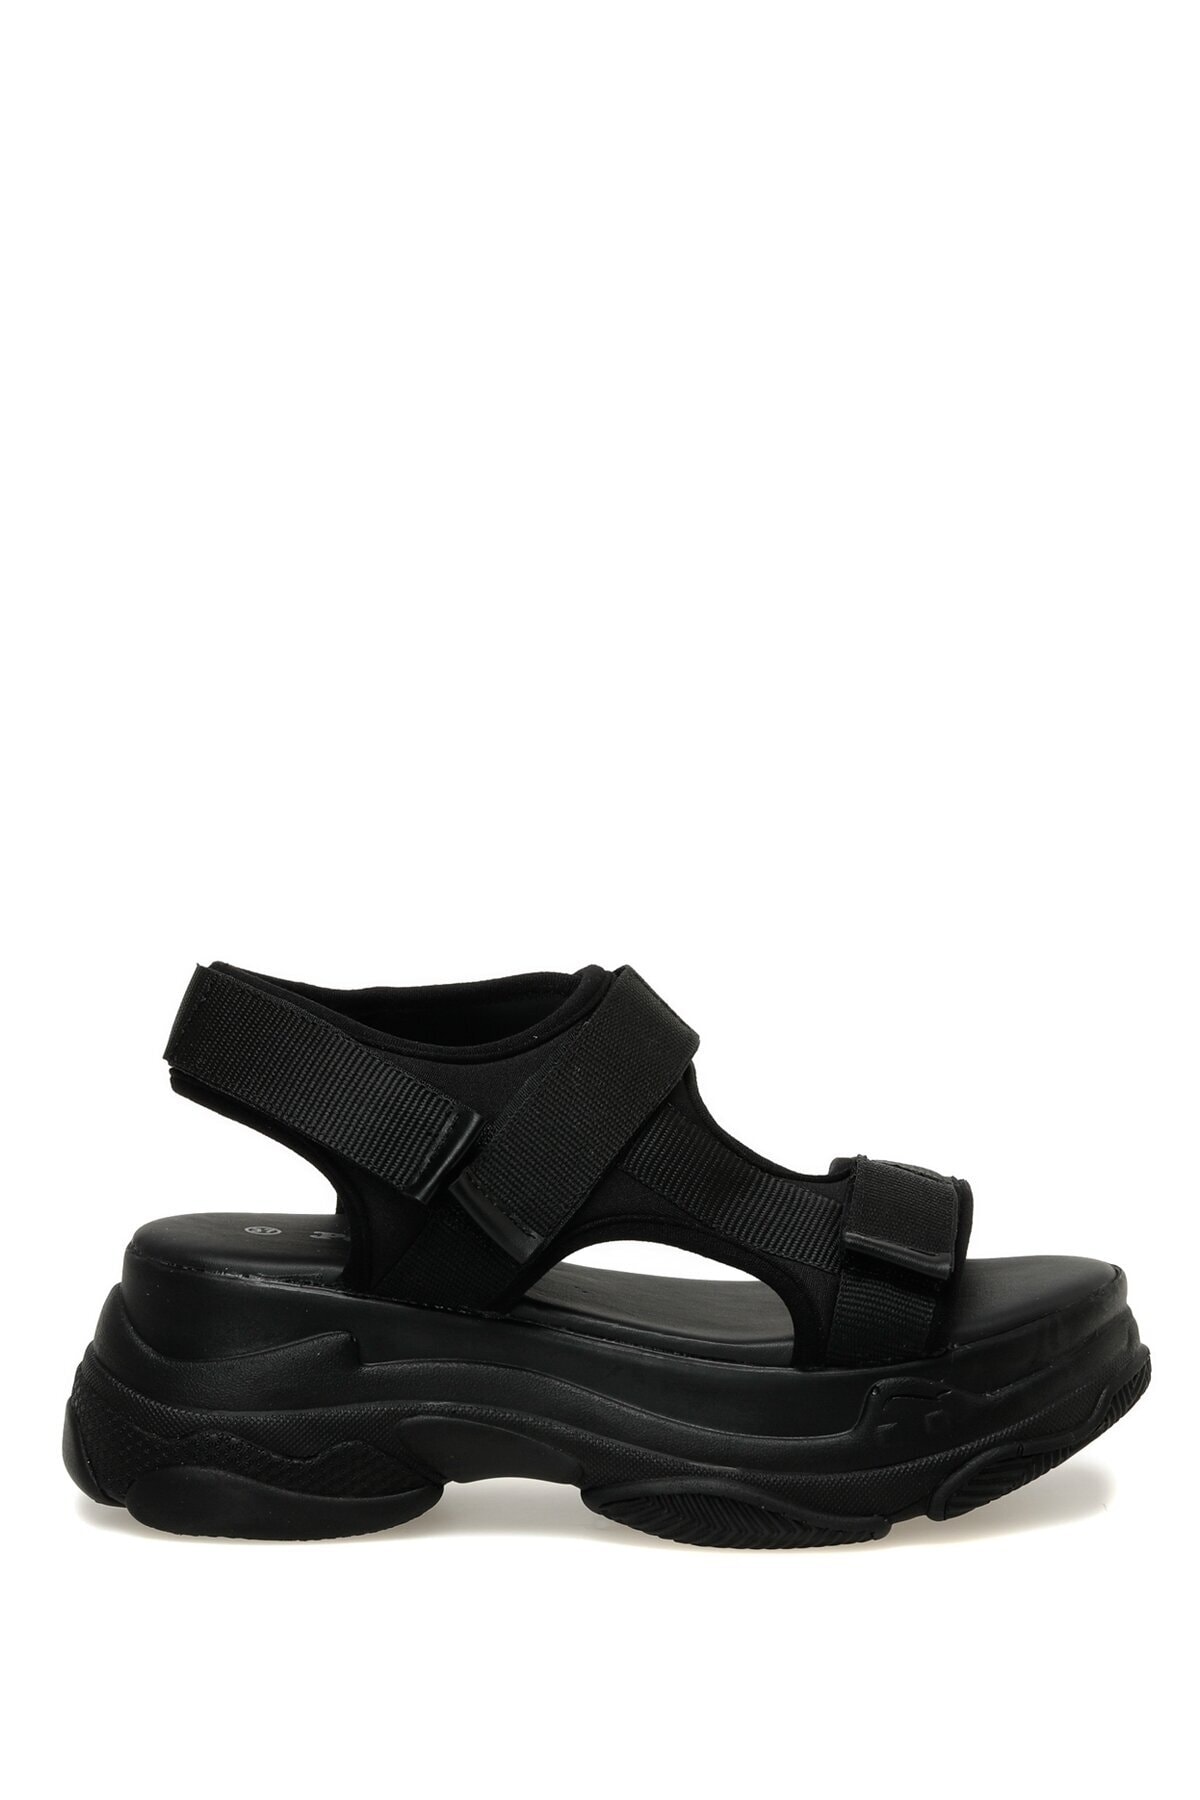 Polaris 315747s.z 3fx Black Women's Sport Sandals